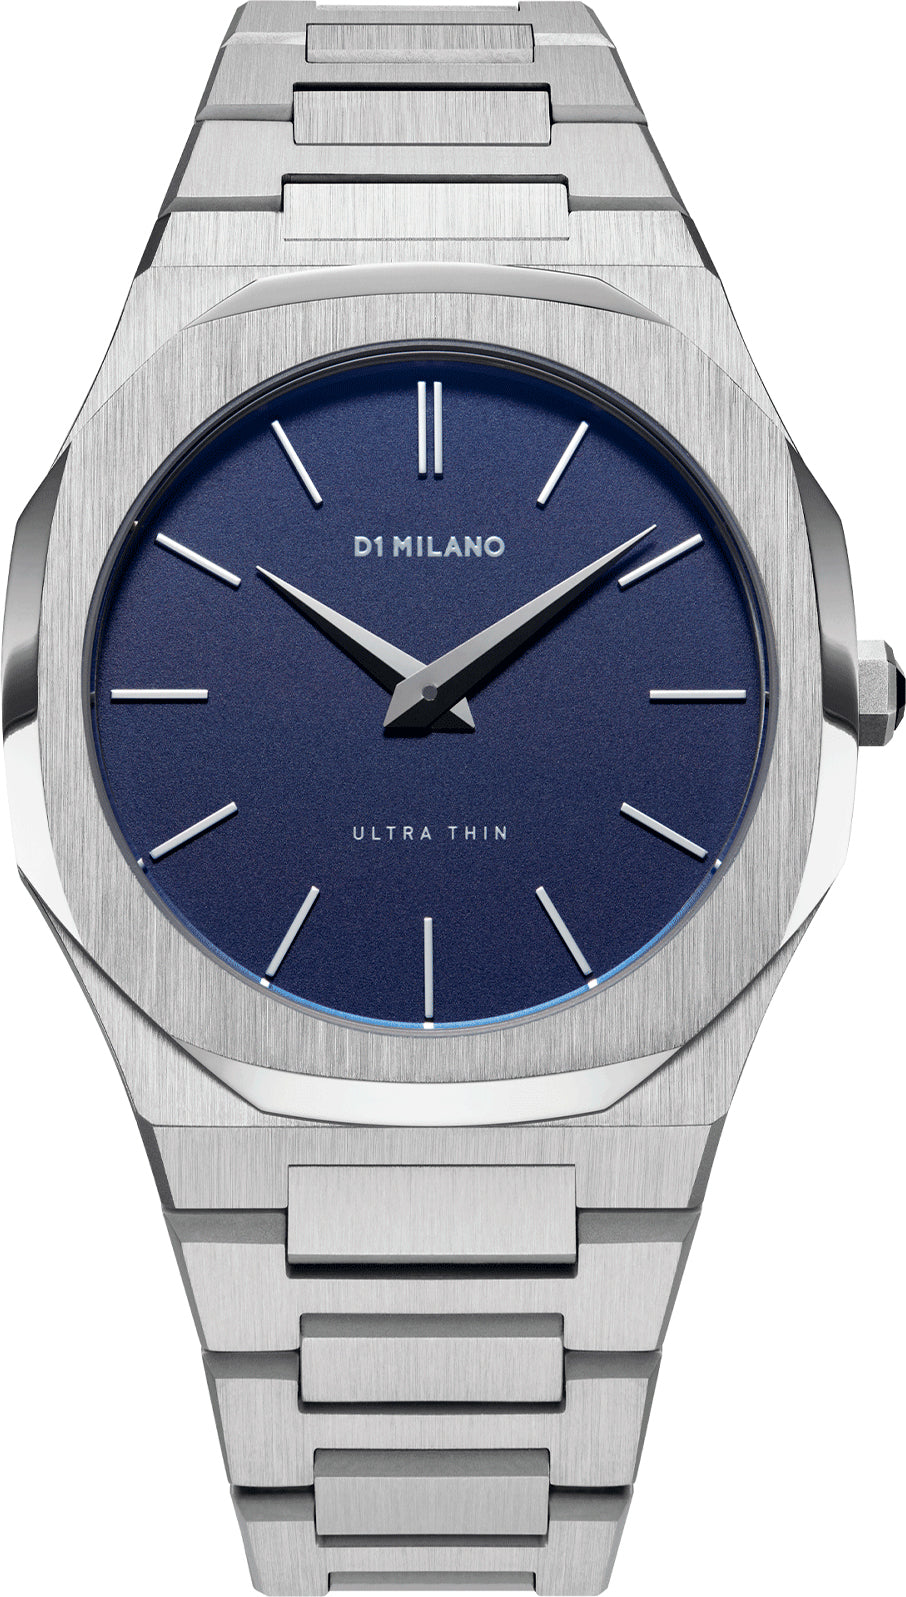 Photos - Wrist Watch Milano D1  Watch Ultra Thin - Blue DLM-052 